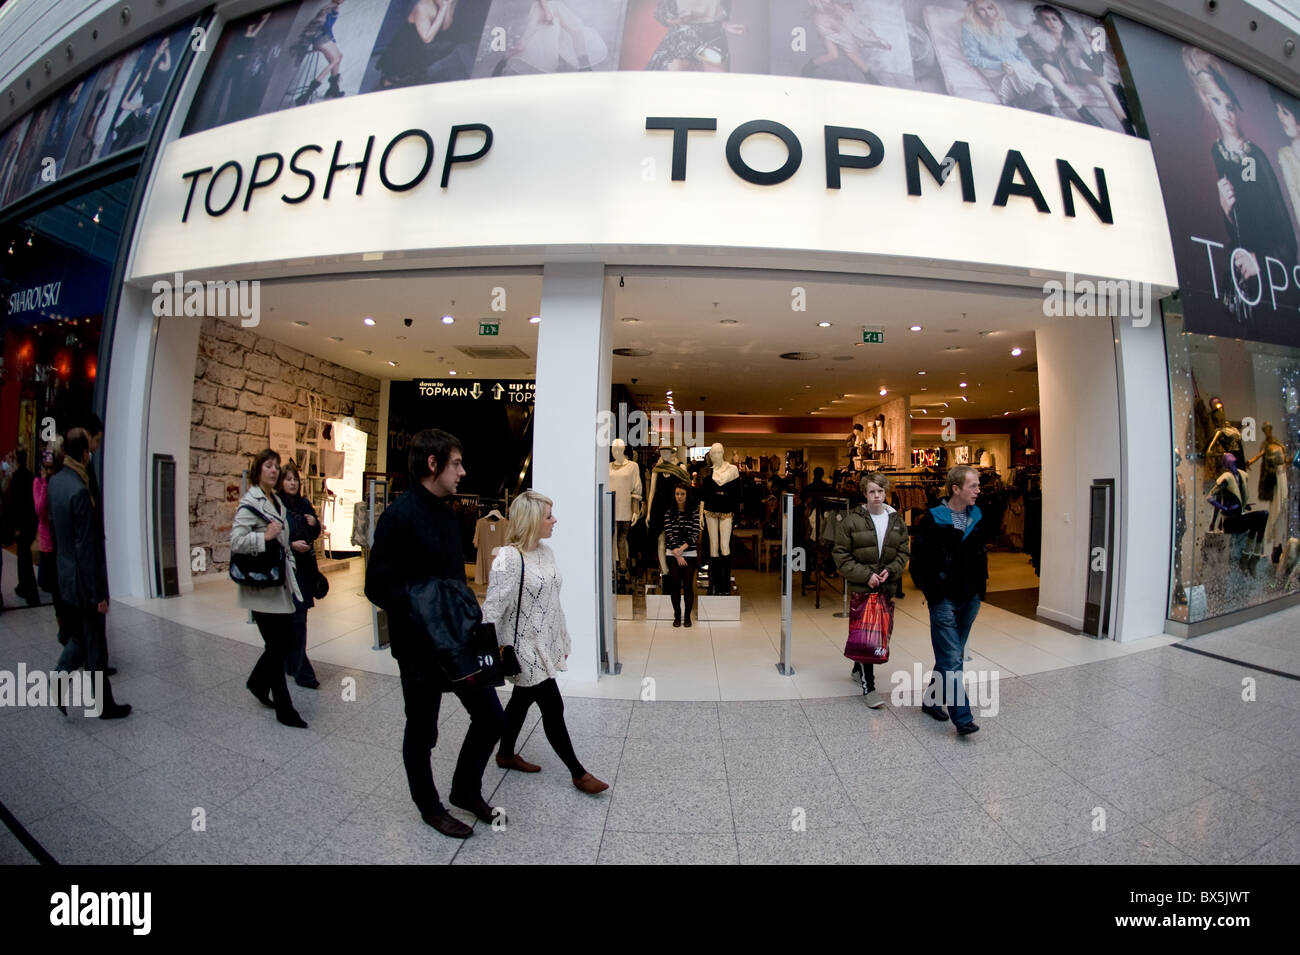 Topshop Topman shop top man shopping fashion high street clothes Stock Photo